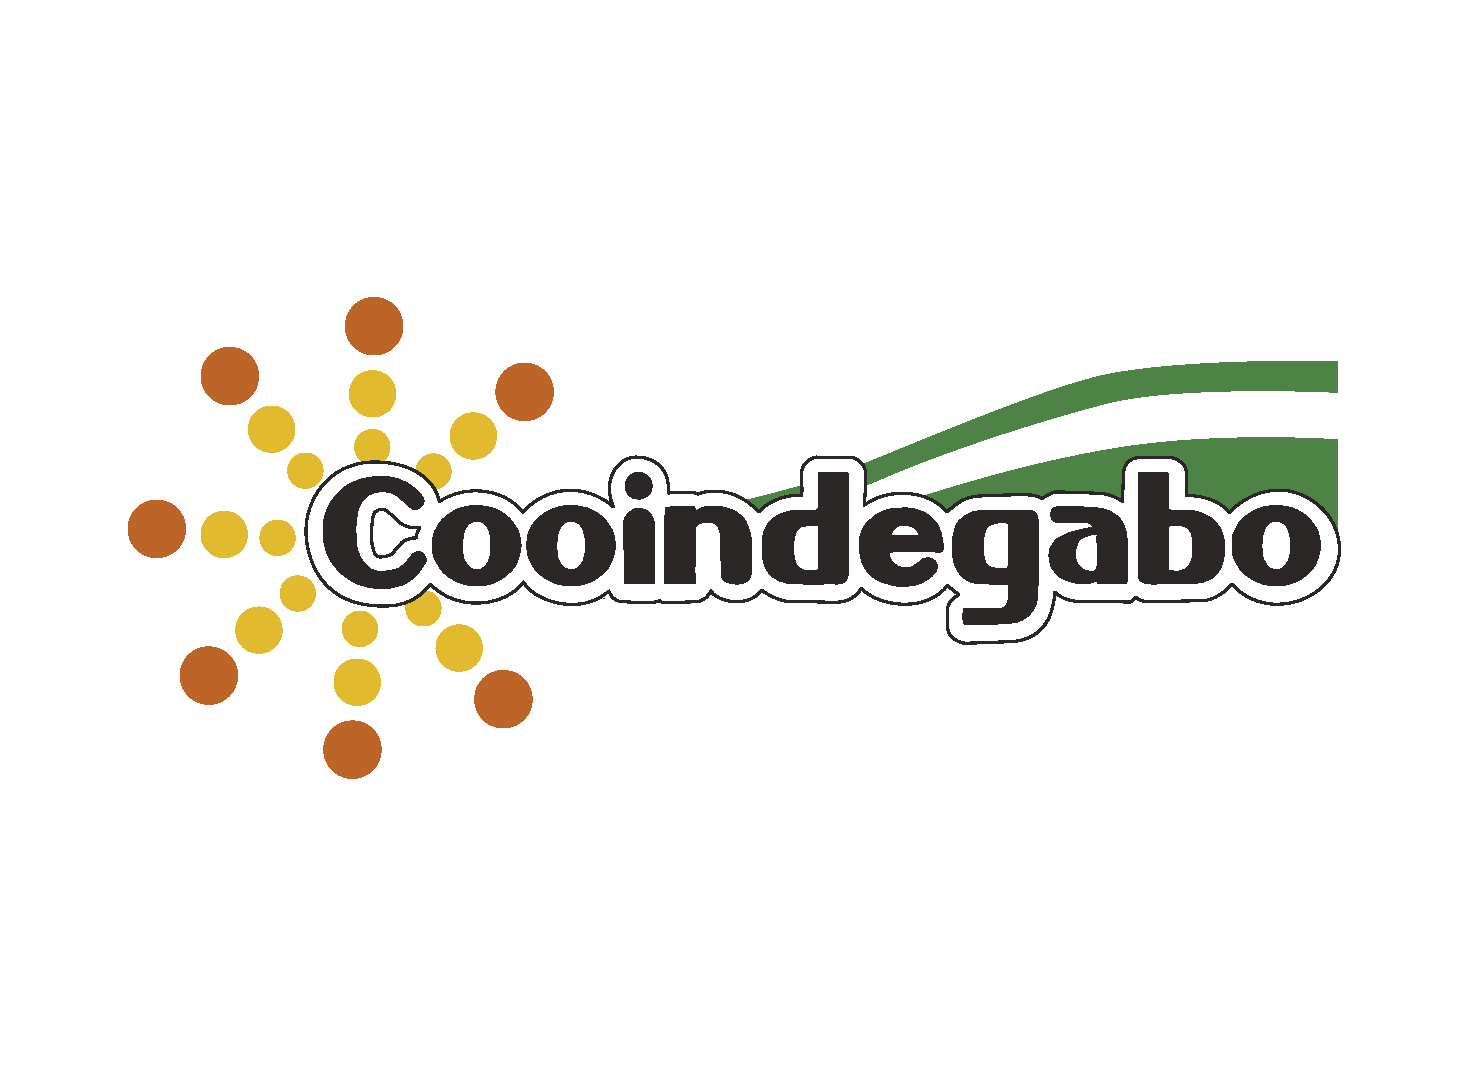 coindegabo logo